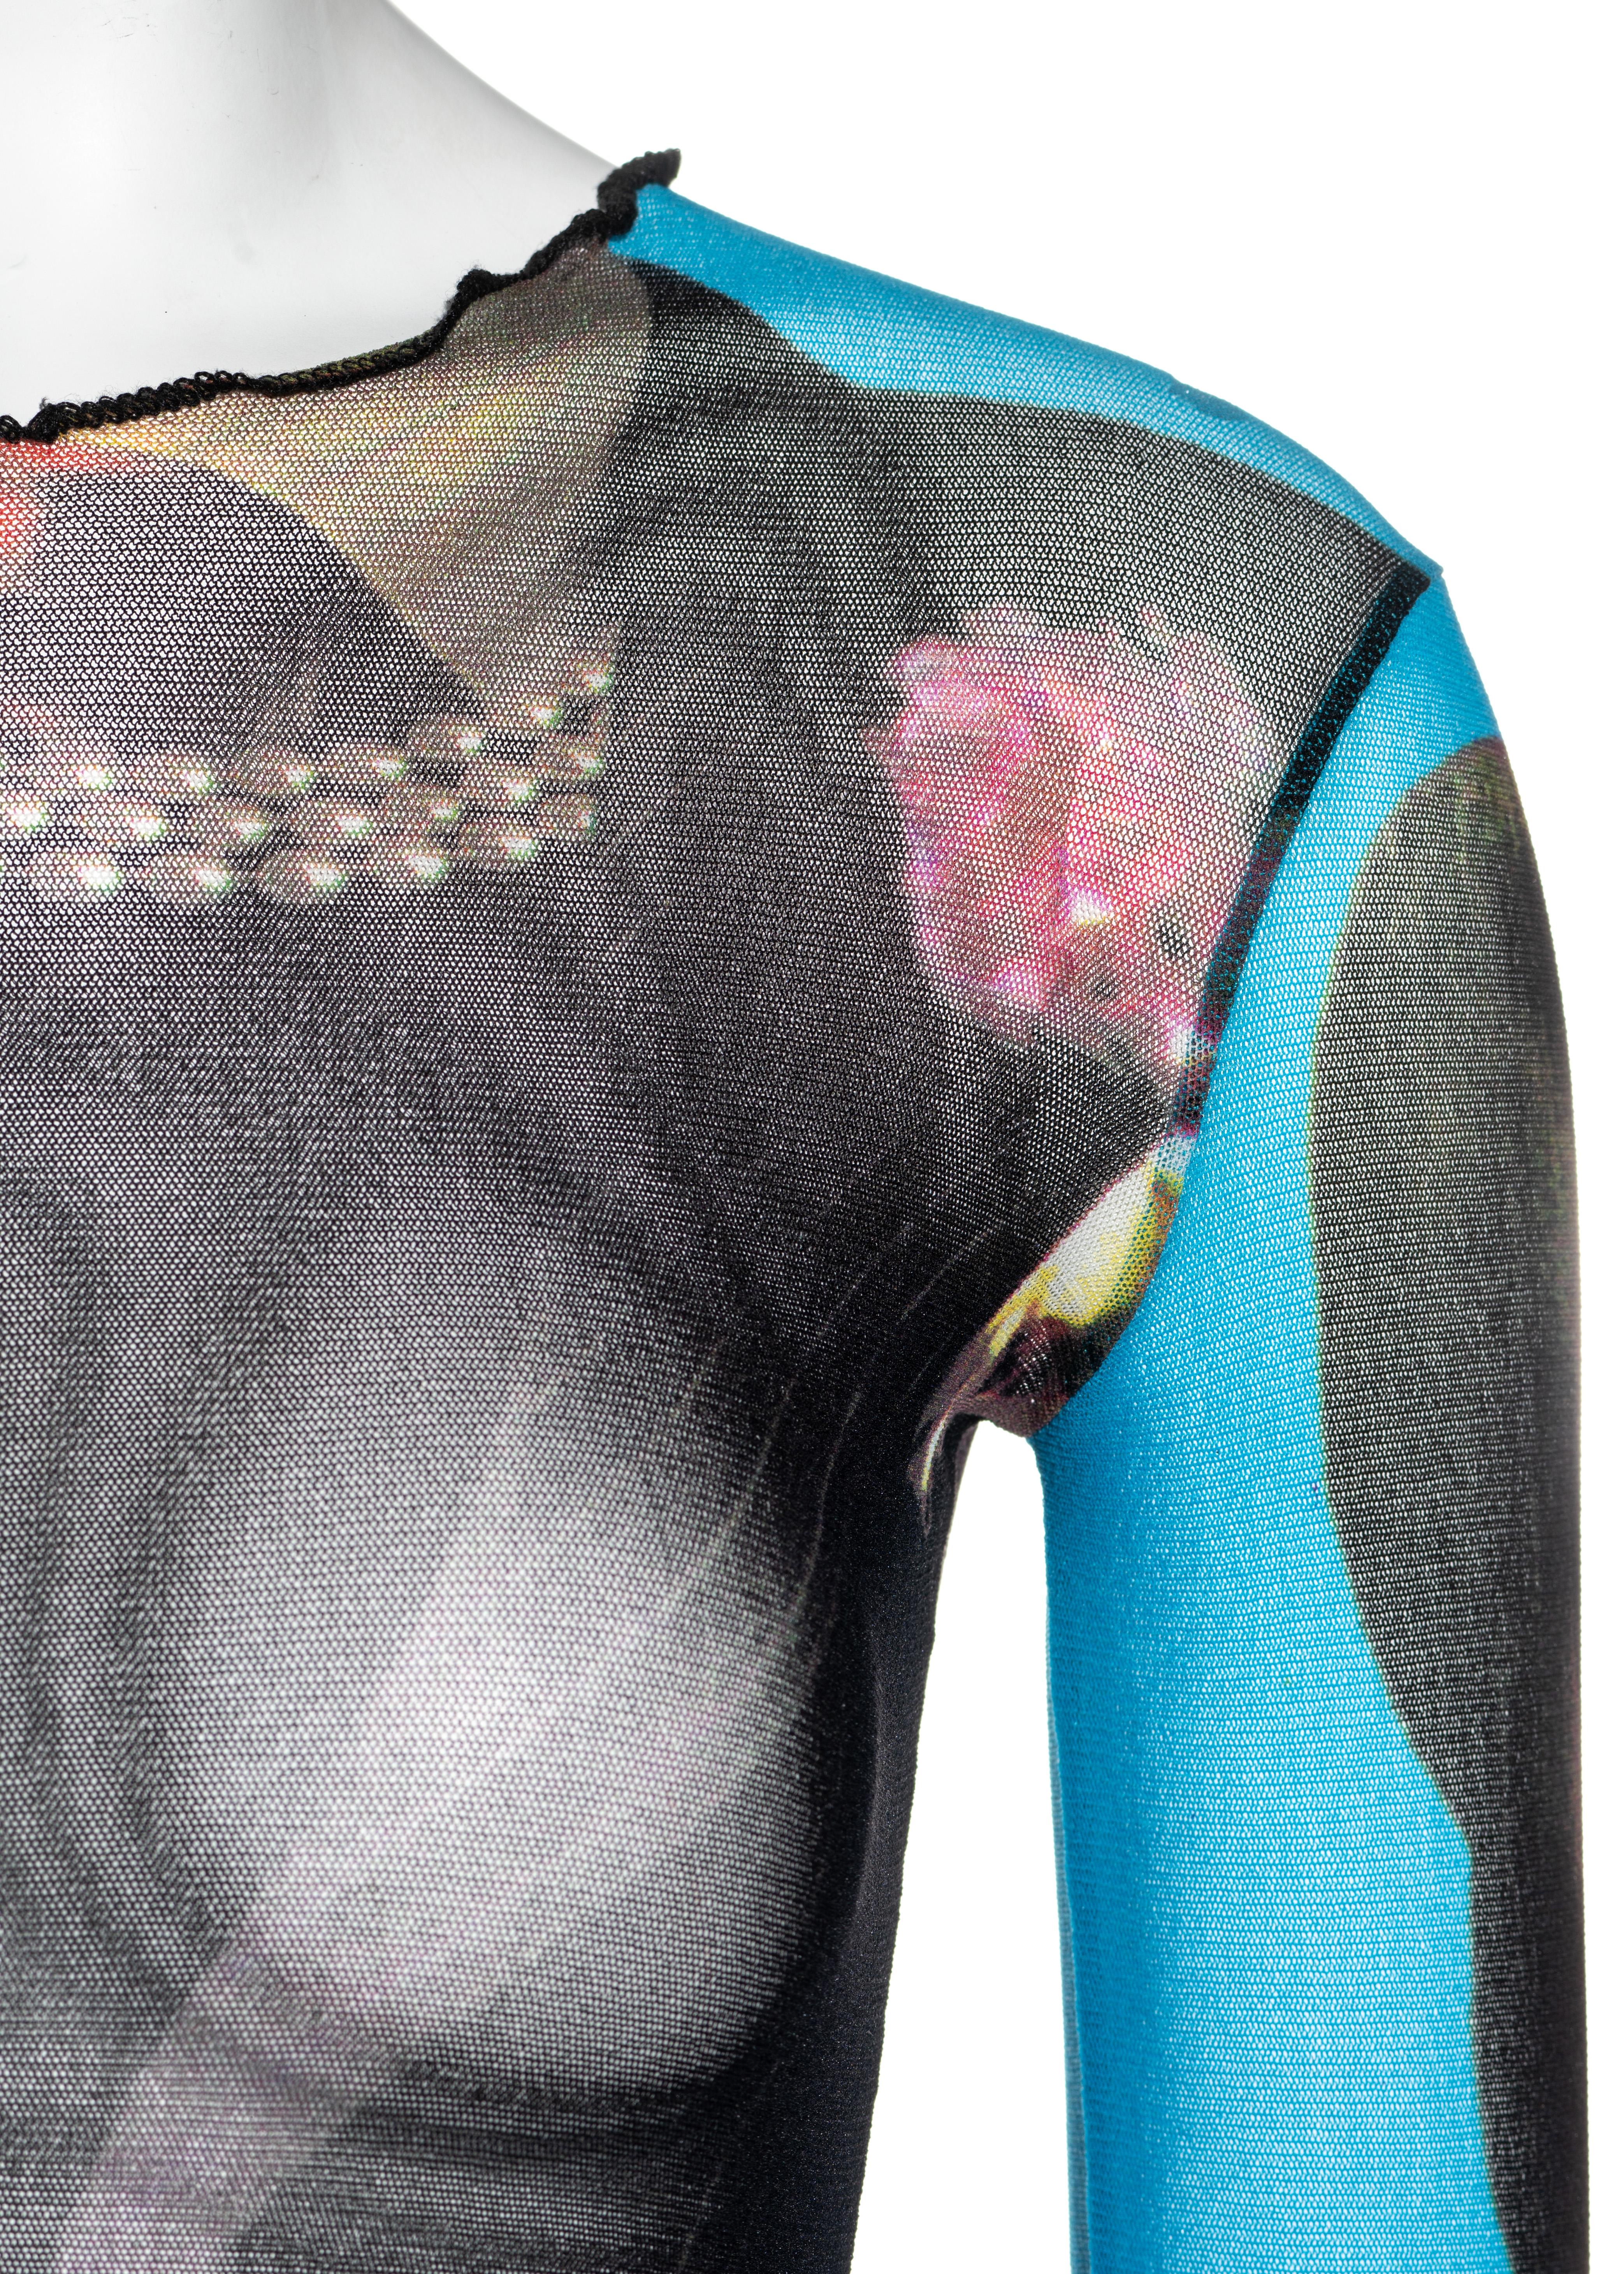 Jean Paul Gaultier multicoloured printed mesh bodycon dress, ss 1997 1